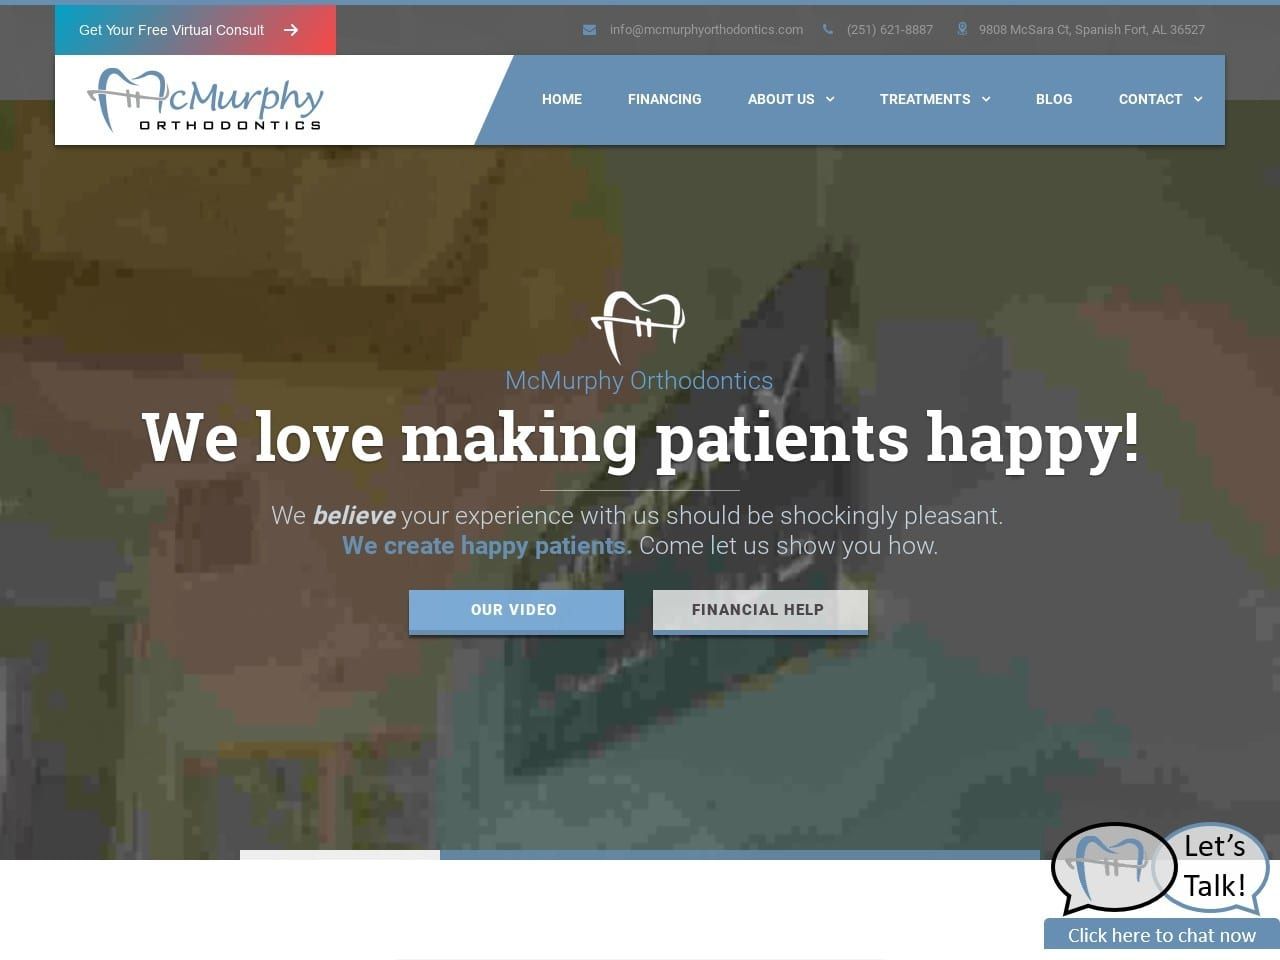 McMurphy Orthodontics Website Screenshot from mcmurphyorthodontics.com